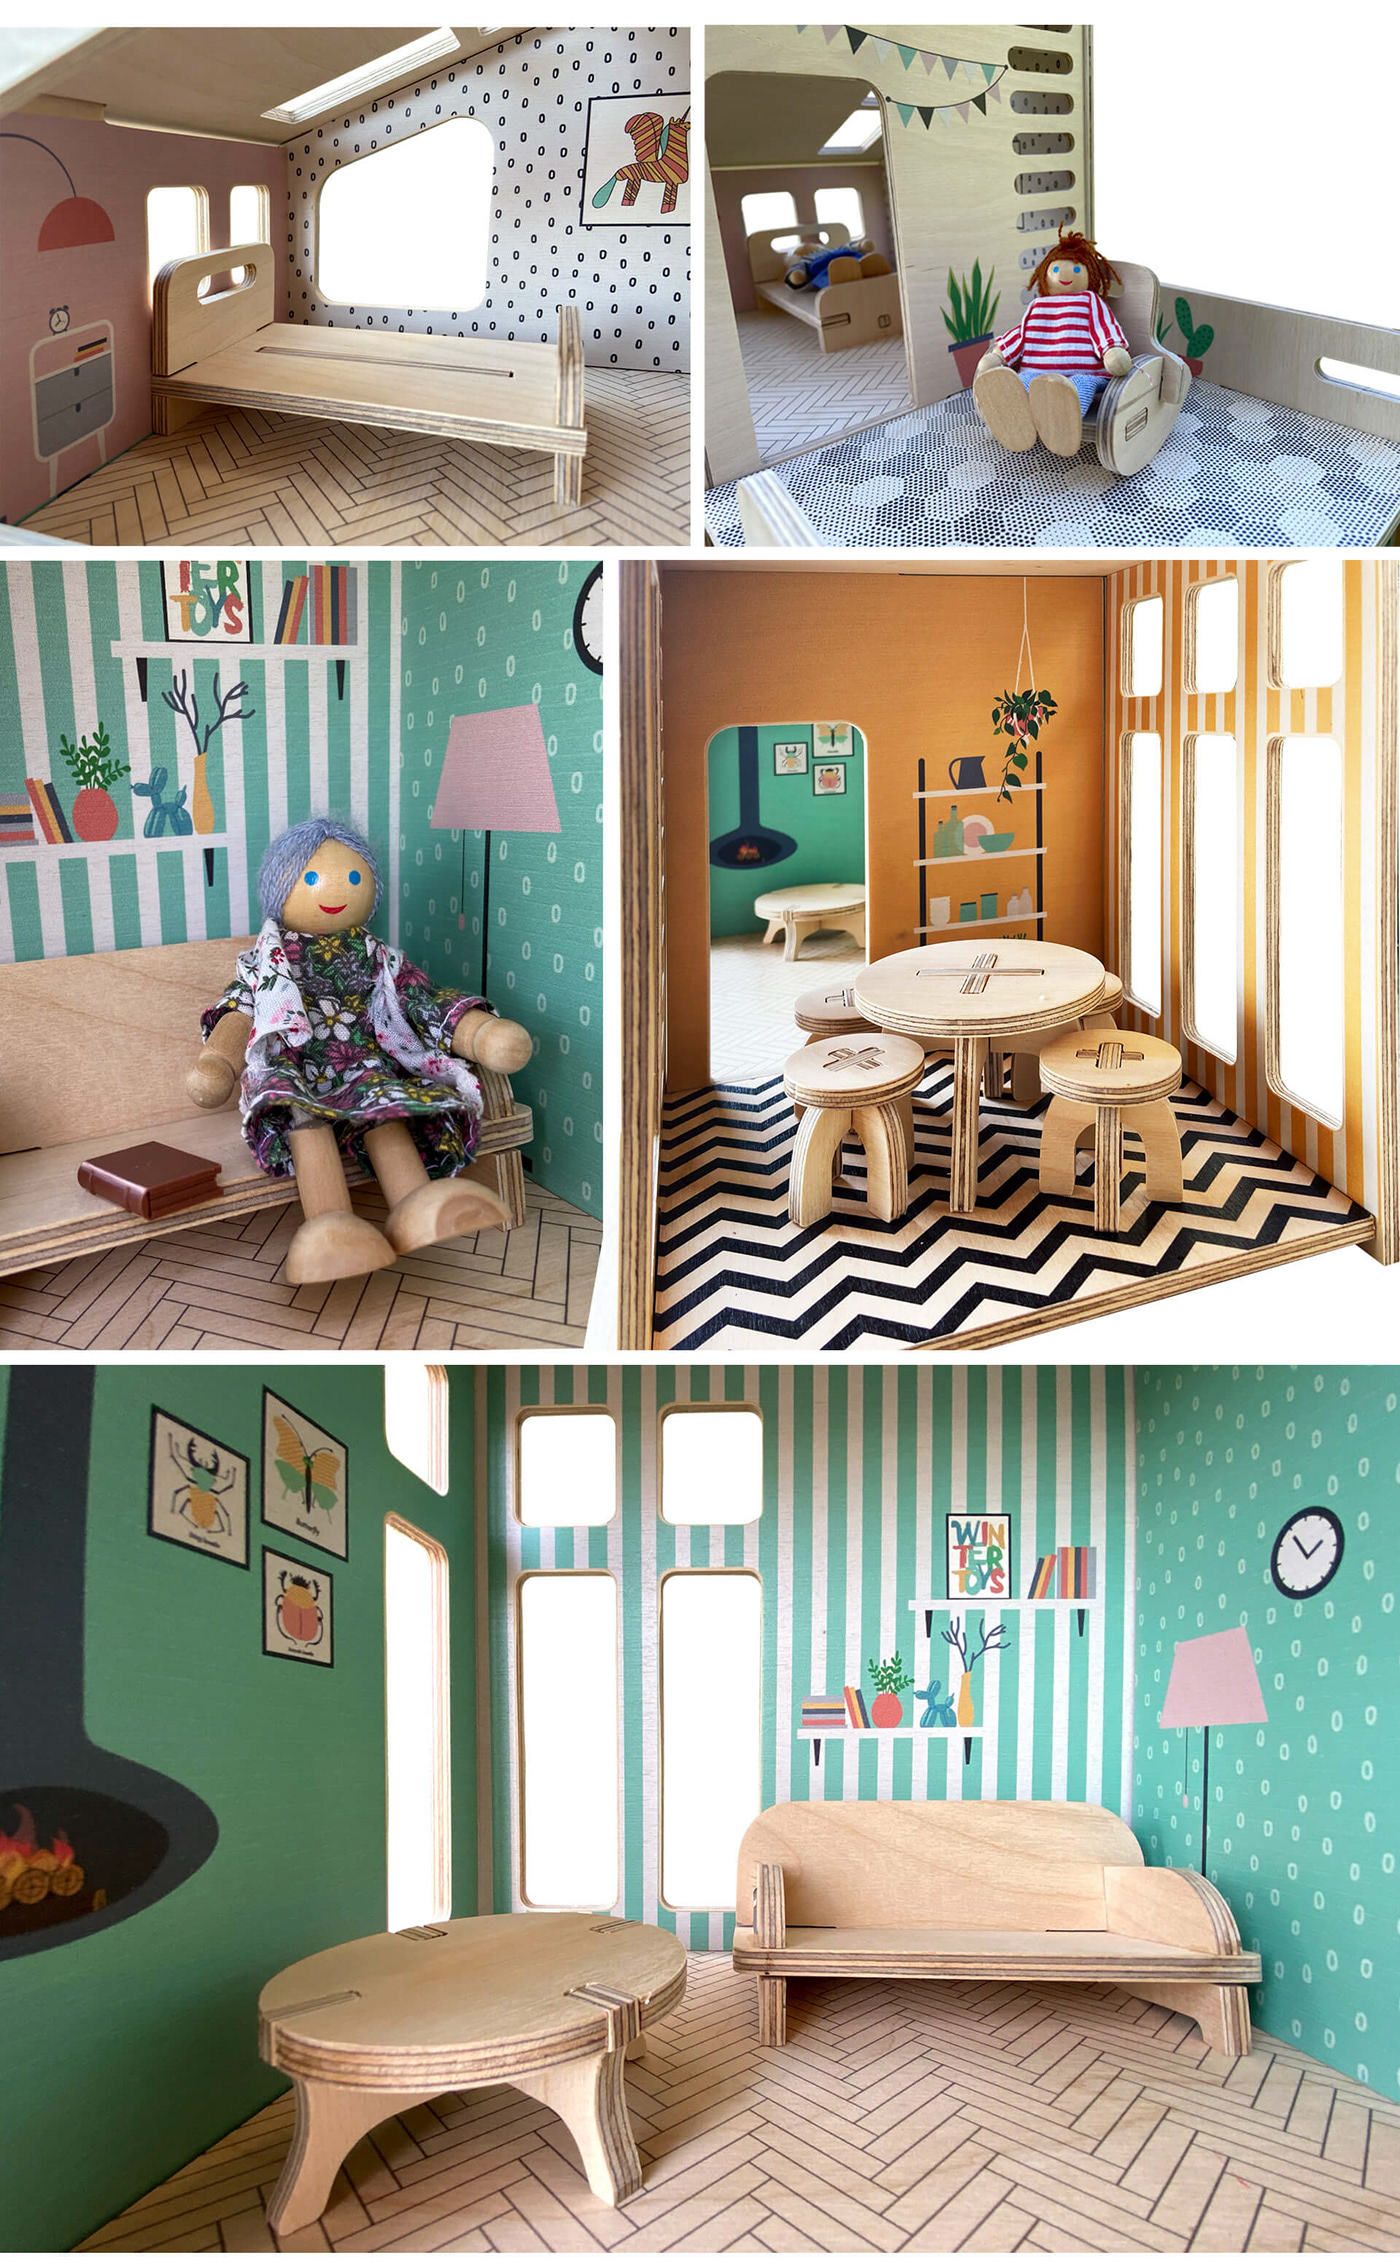 dollhouse furniture design  house kids plywood toy wood кукольный домик Фанера  ЧПУ